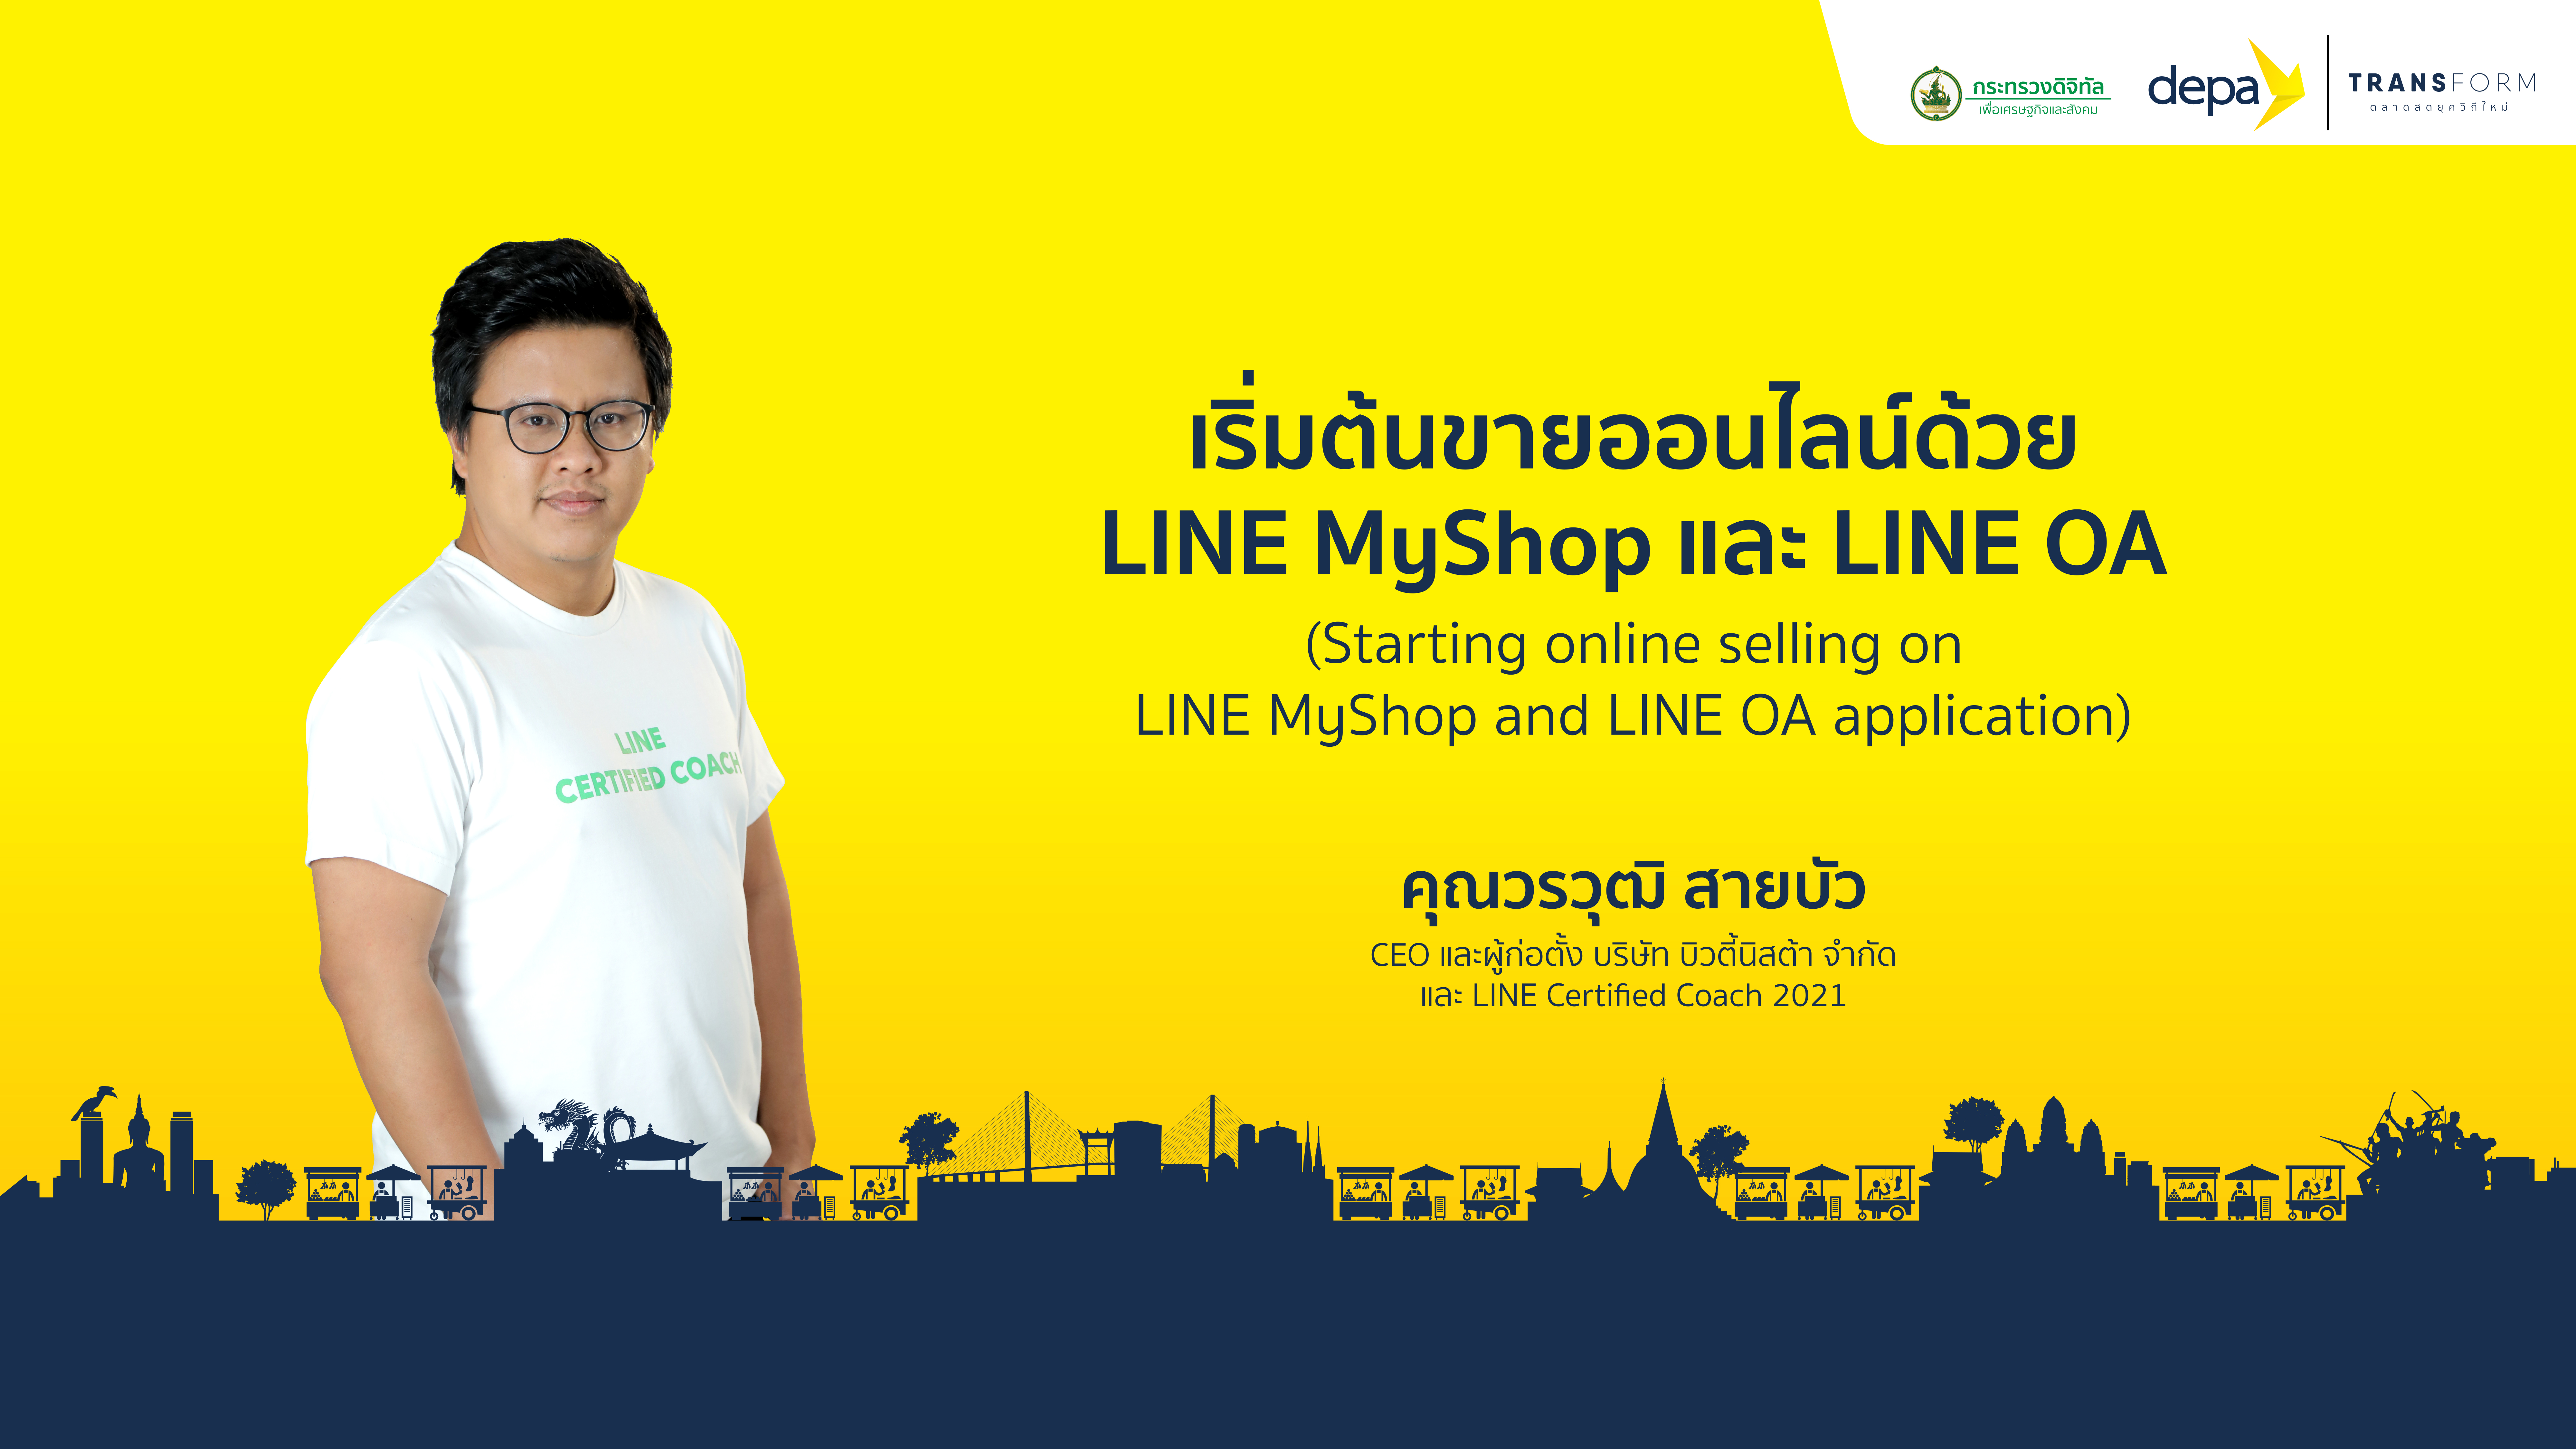 Starting online selling on LINE MyShop and LINE OA Application LINE_depa